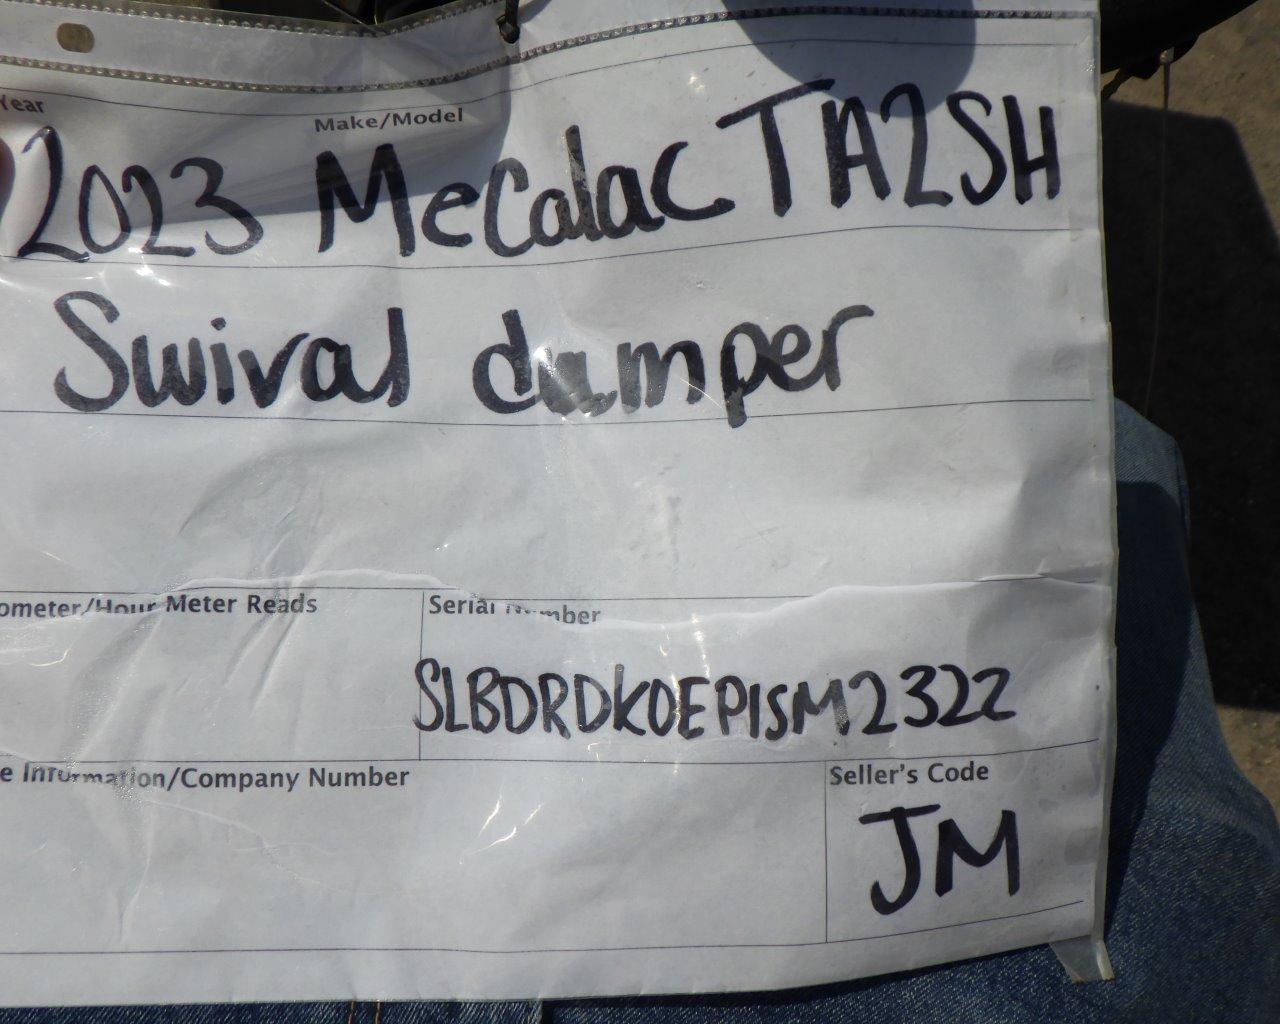 2023 MECALAC TA2sh Articulating Dumper s/n:SLBDRDKOEPISM2322